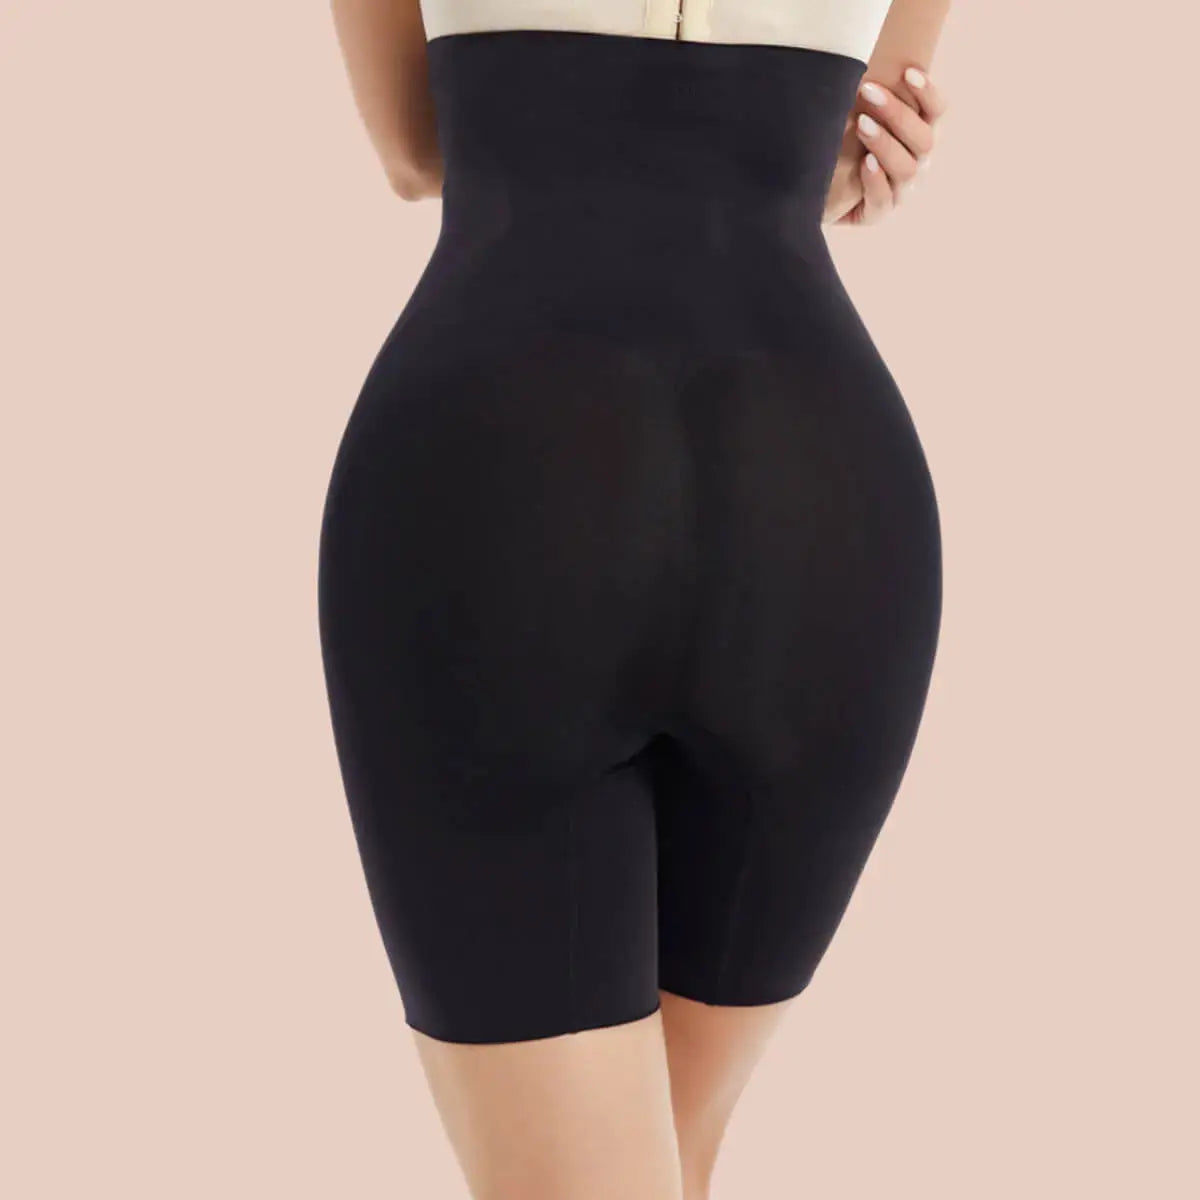 DICOINA Shapewear Shorts Firm Control High Waist, Hip Enhancer for  Transgender, Seamless Anti Chafing Control Pants Invisible,Black-M (Beige  3XL) : : Fashion